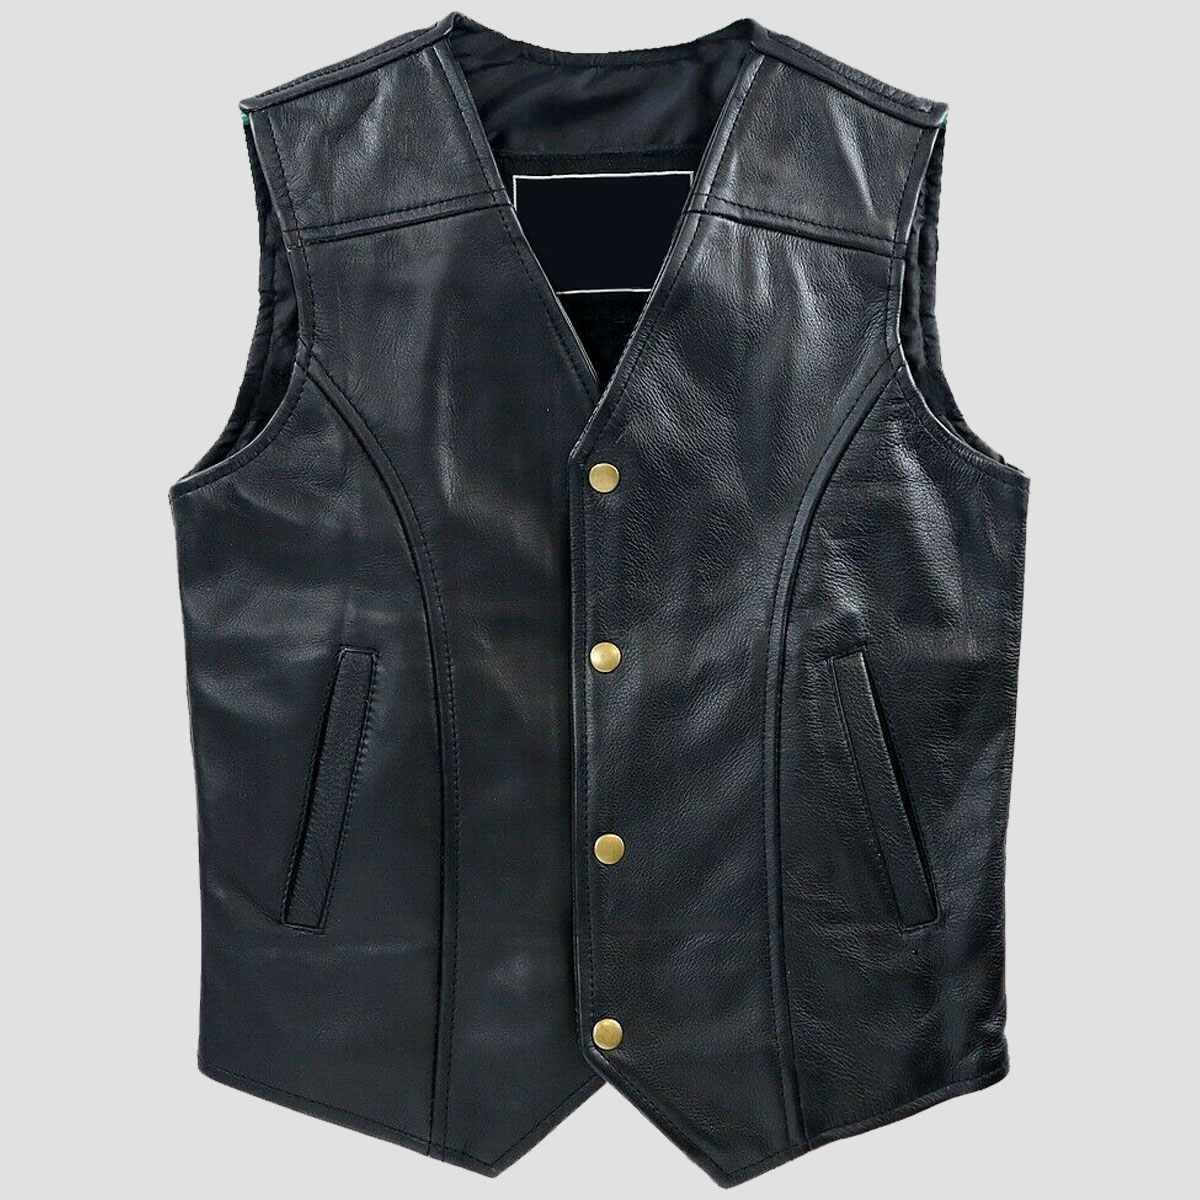 Stylish Black Leather Biker Vest - The Vintage Leather